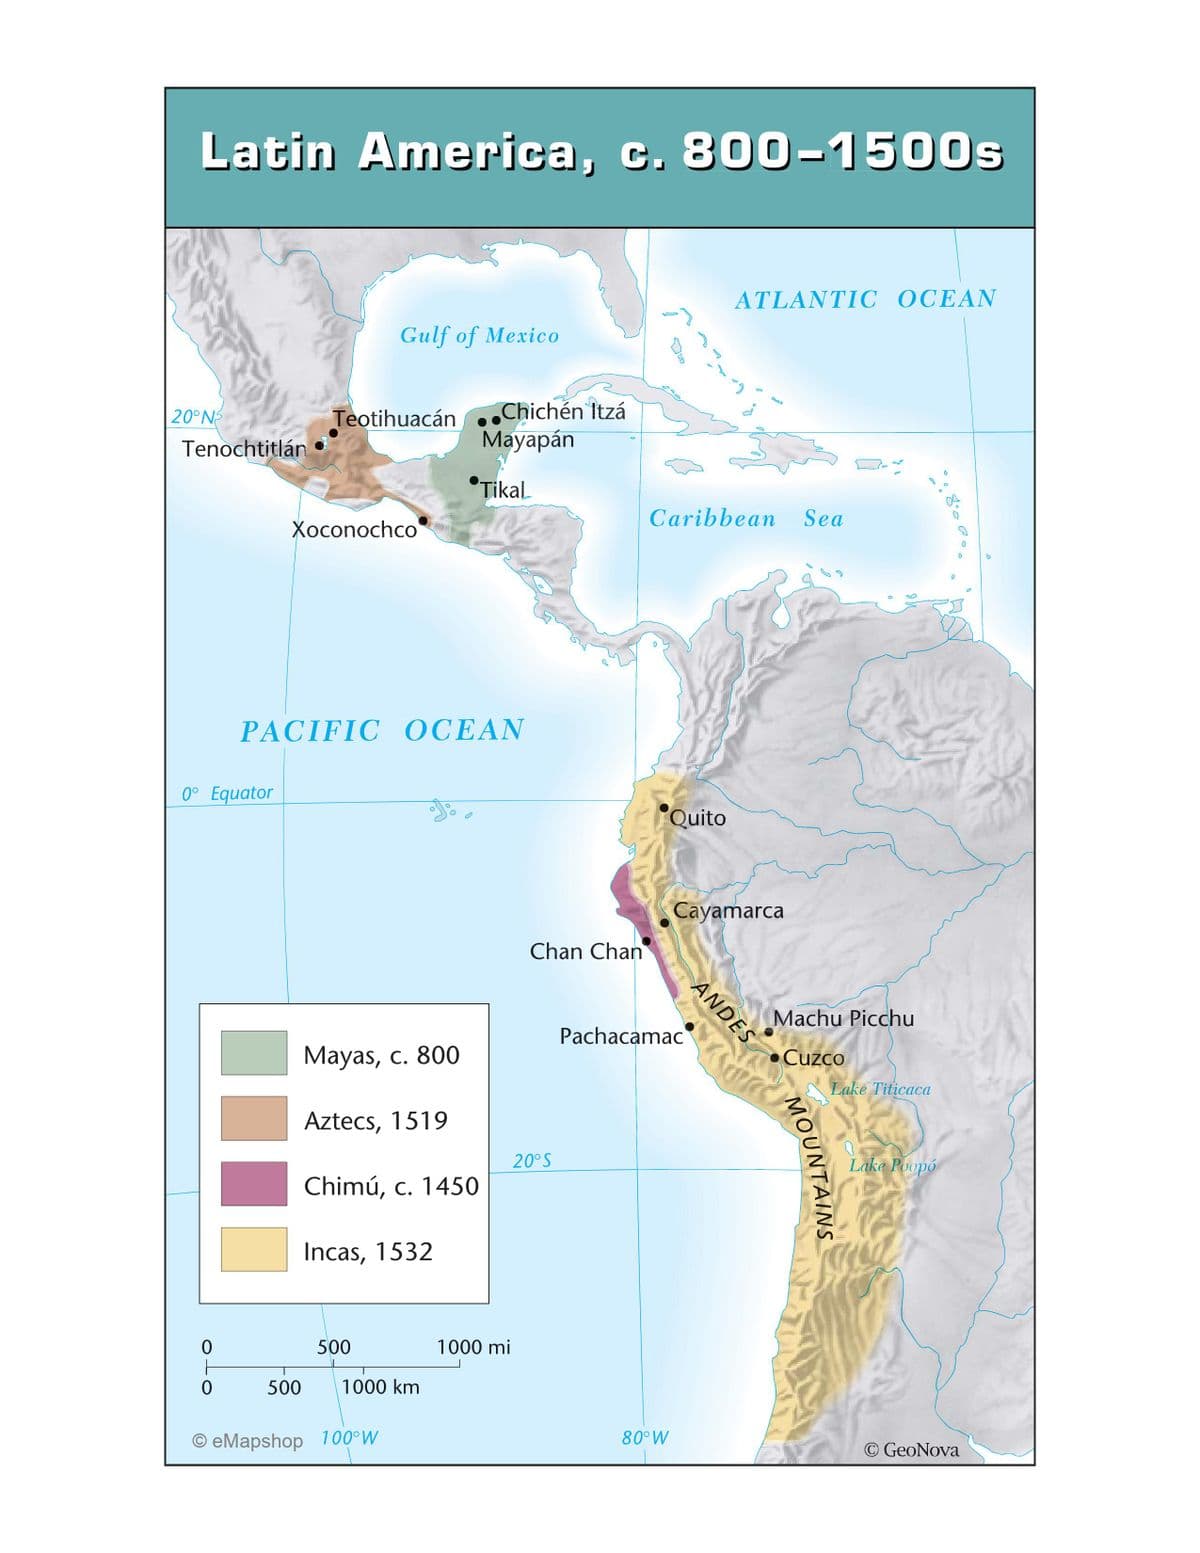 Latin America, c. 800-1500s
20°NS
Tenochtitlán
0° Equator
0
0
Gulf of Mexico
Teotihuacán..
Xoconochco
PACIFIC OCEAN
Mayas, c. 800
Aztecs, 1519
Chimú, c. 1450
Incas, 1532
500
Chichén Itzá
Mayapán
Tikal
500 1000 km
OeMapshop 100°W
1000 mi
Chan Chan
20°S
Quito
80° W
Caribbean Sea
Pachacamac
ATLANTIC OCEAN
M
ANDES
Qad
Cayamarca
Machu Picchu
Cuzco
Stre
MOUNTAINS
Lake Titicaca
Lake Poopó
80
D
© GeoNova